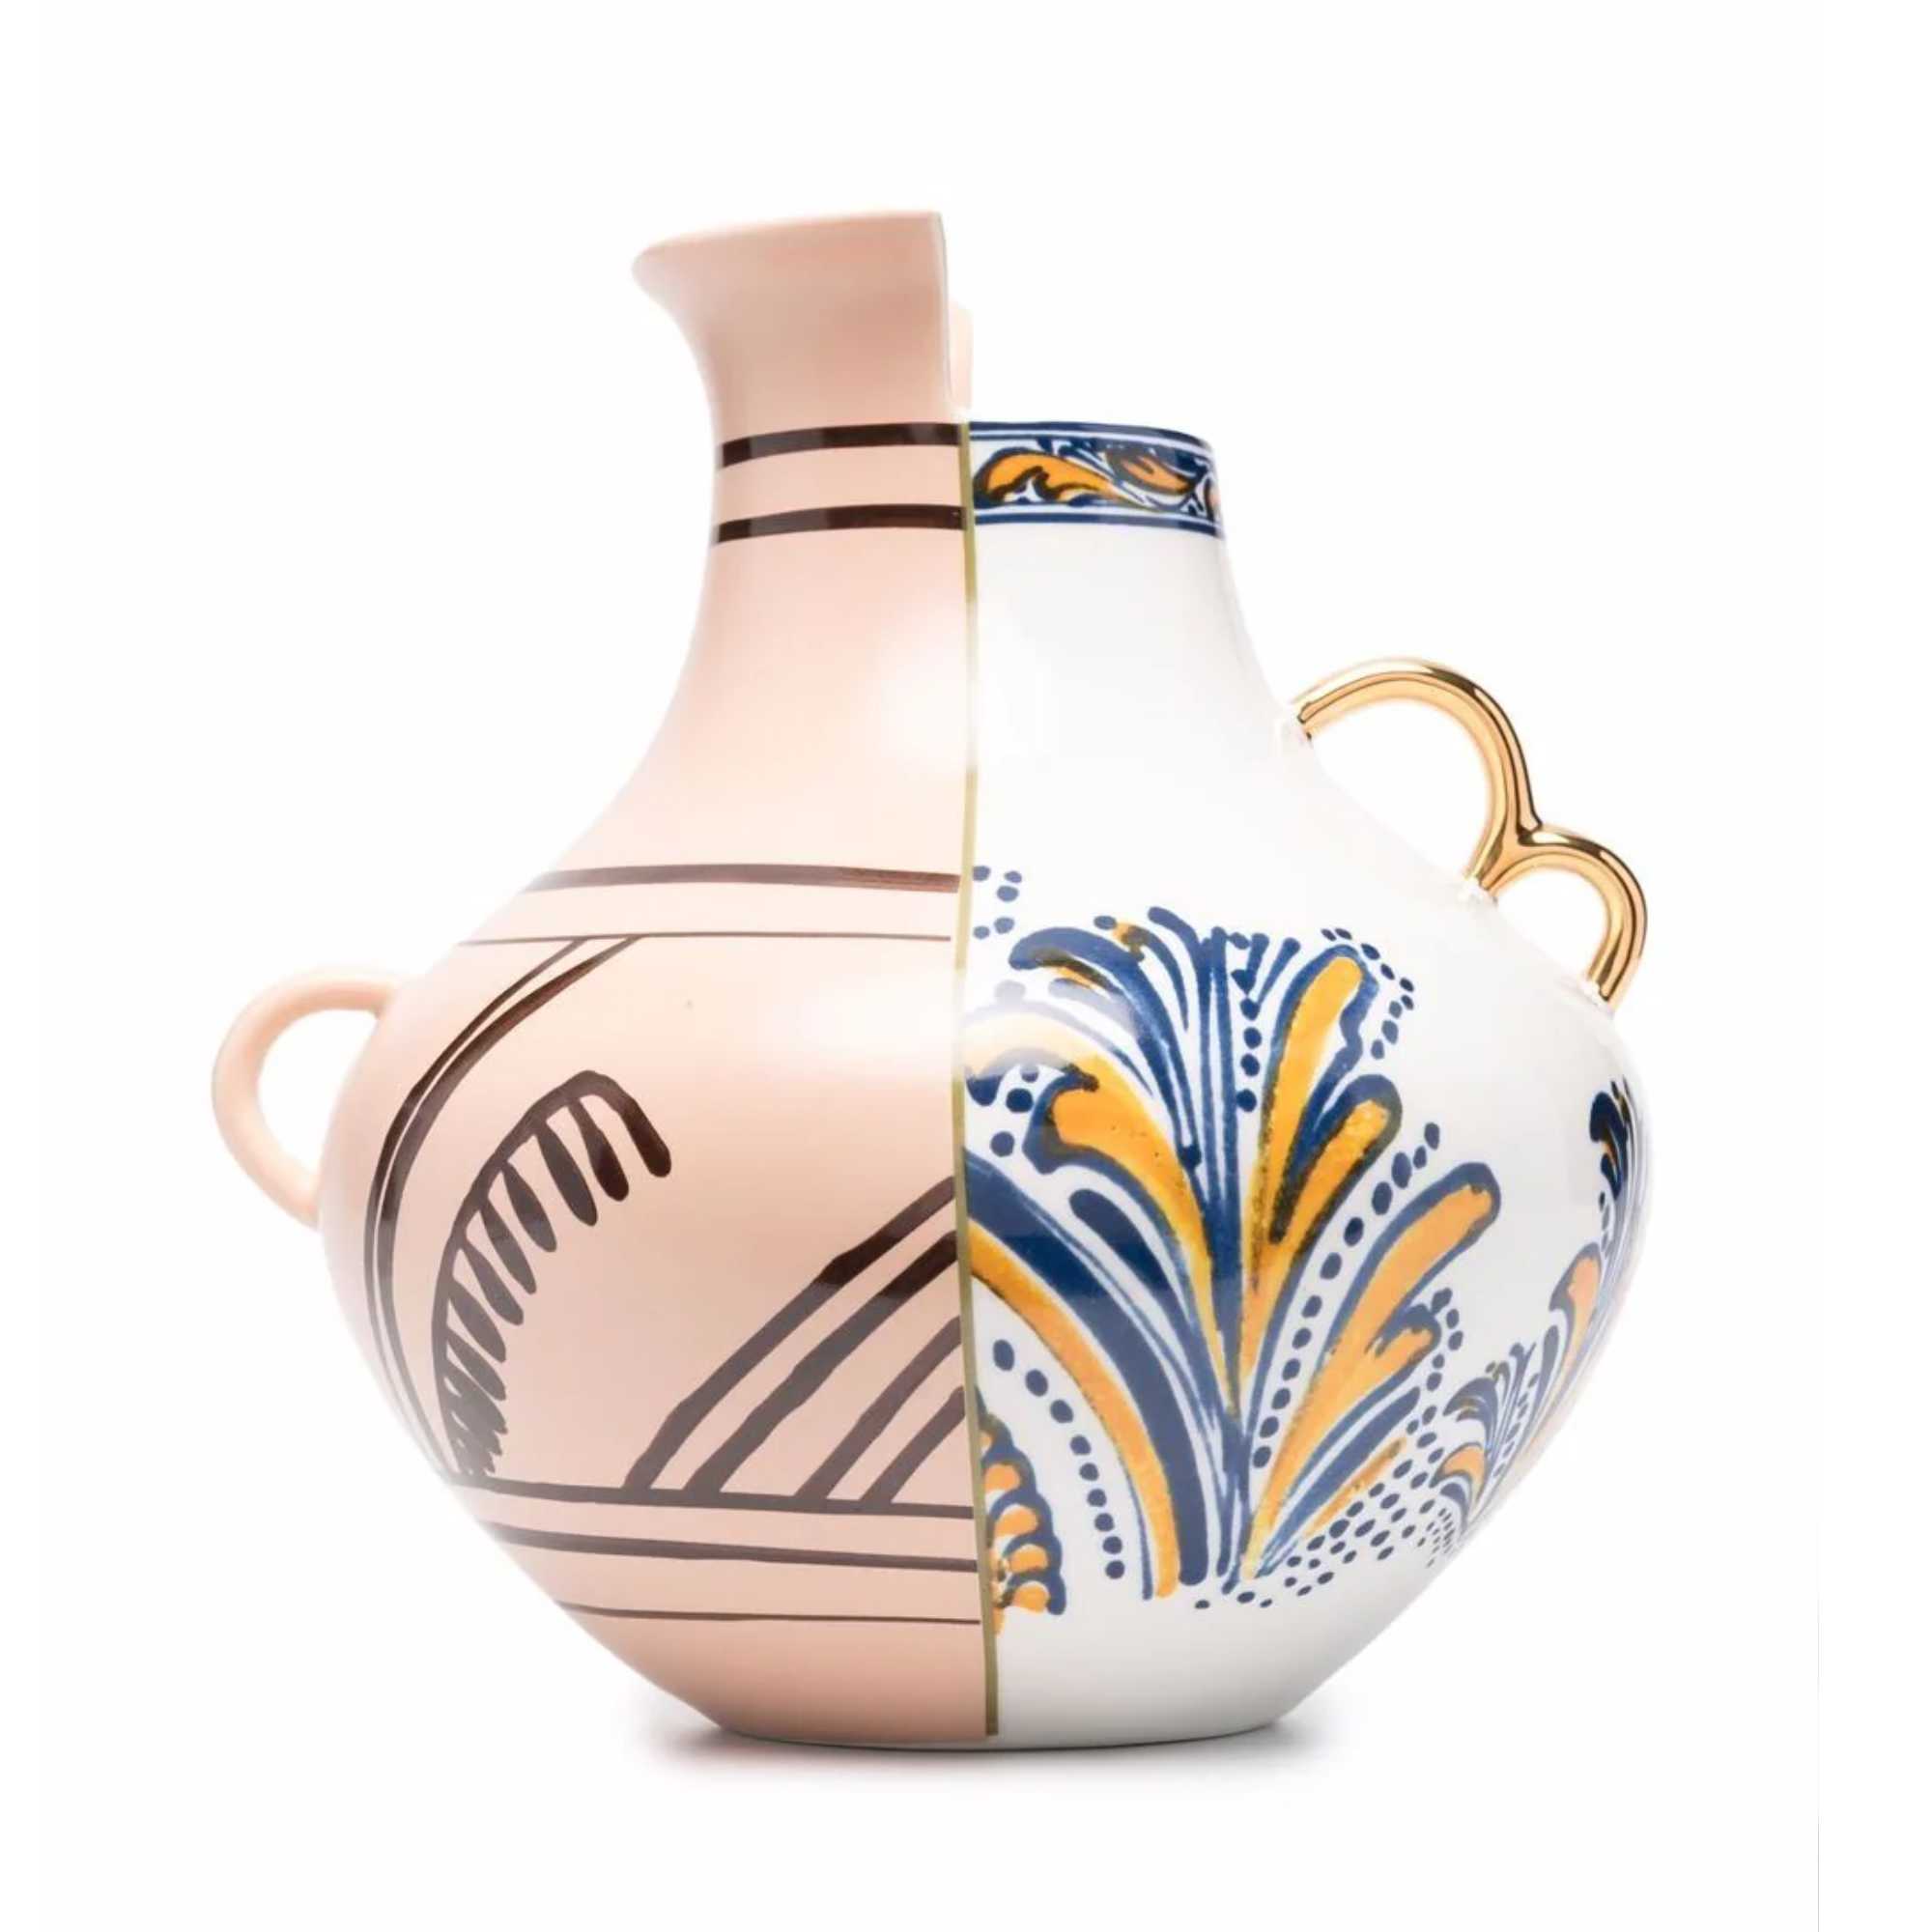 Seletti Hybrid Nazca Porcelain Vase